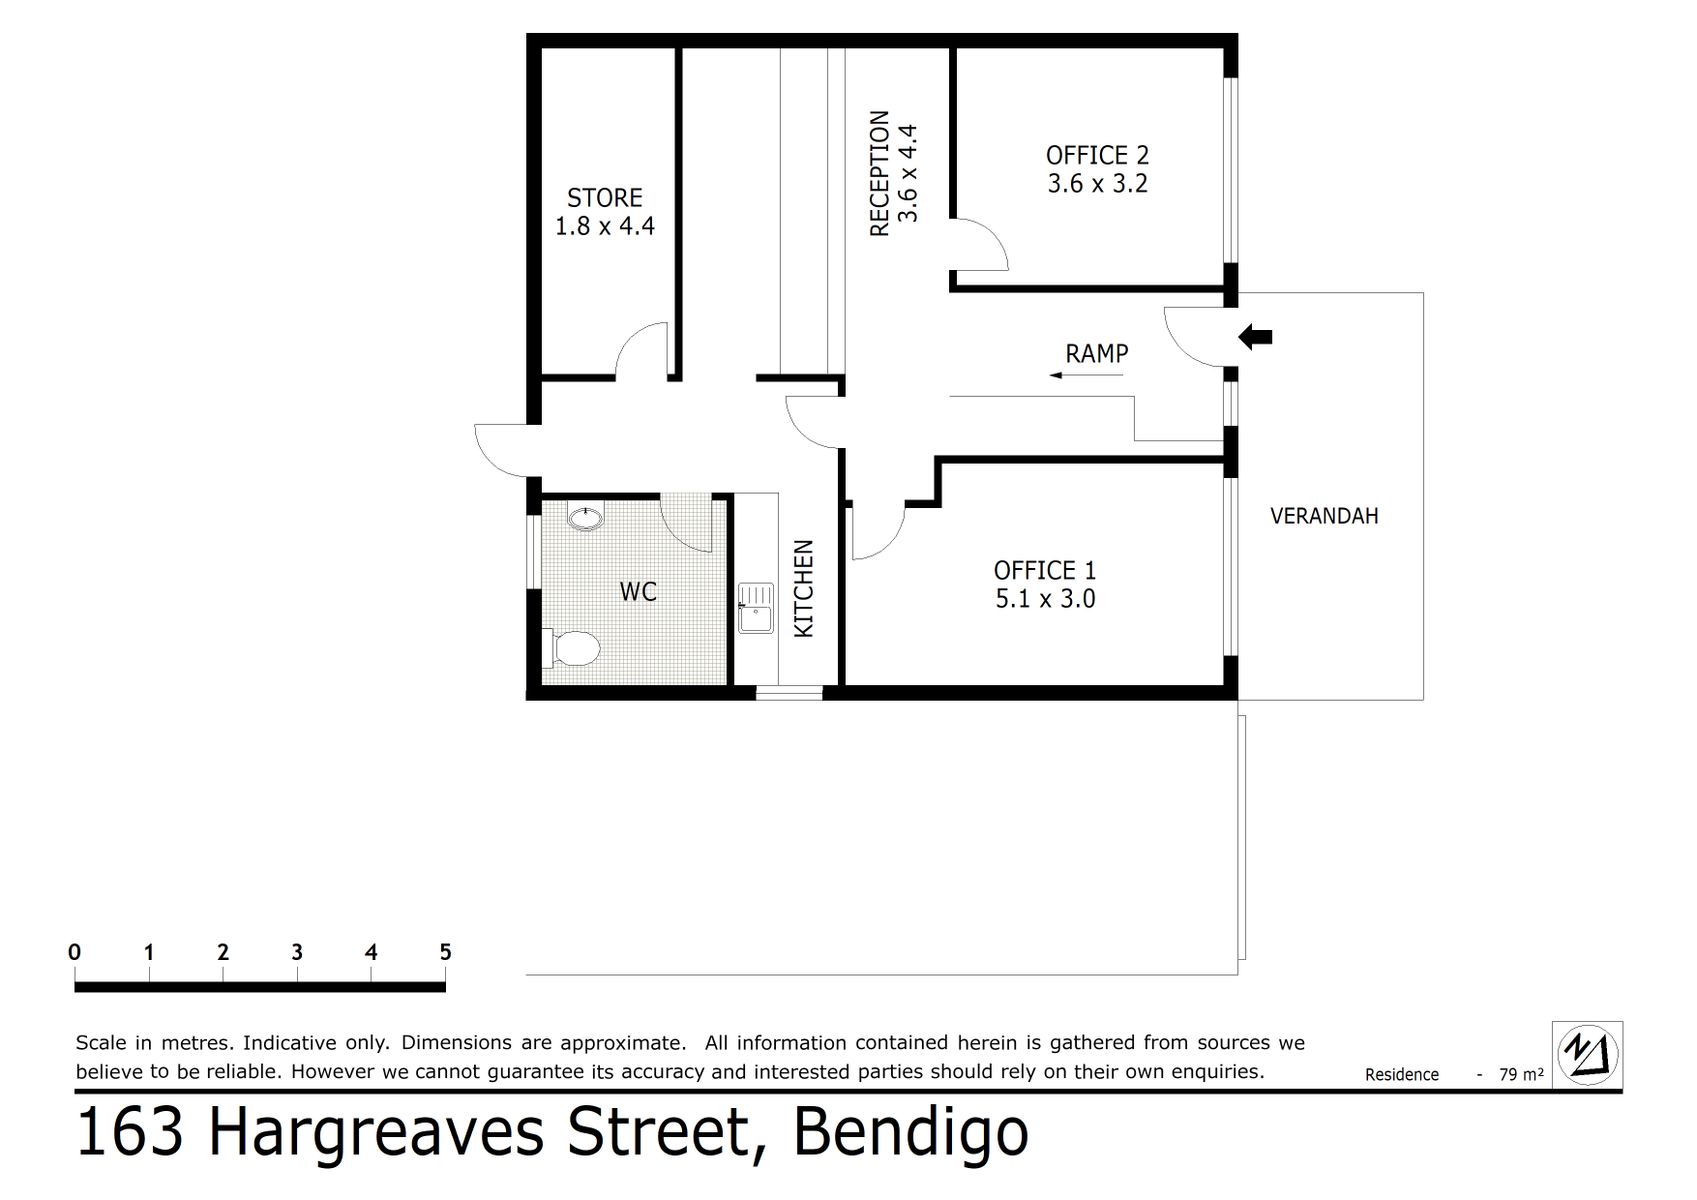 163 Hargreaves Street Bendigo (21 MAY 2021) 79sqm